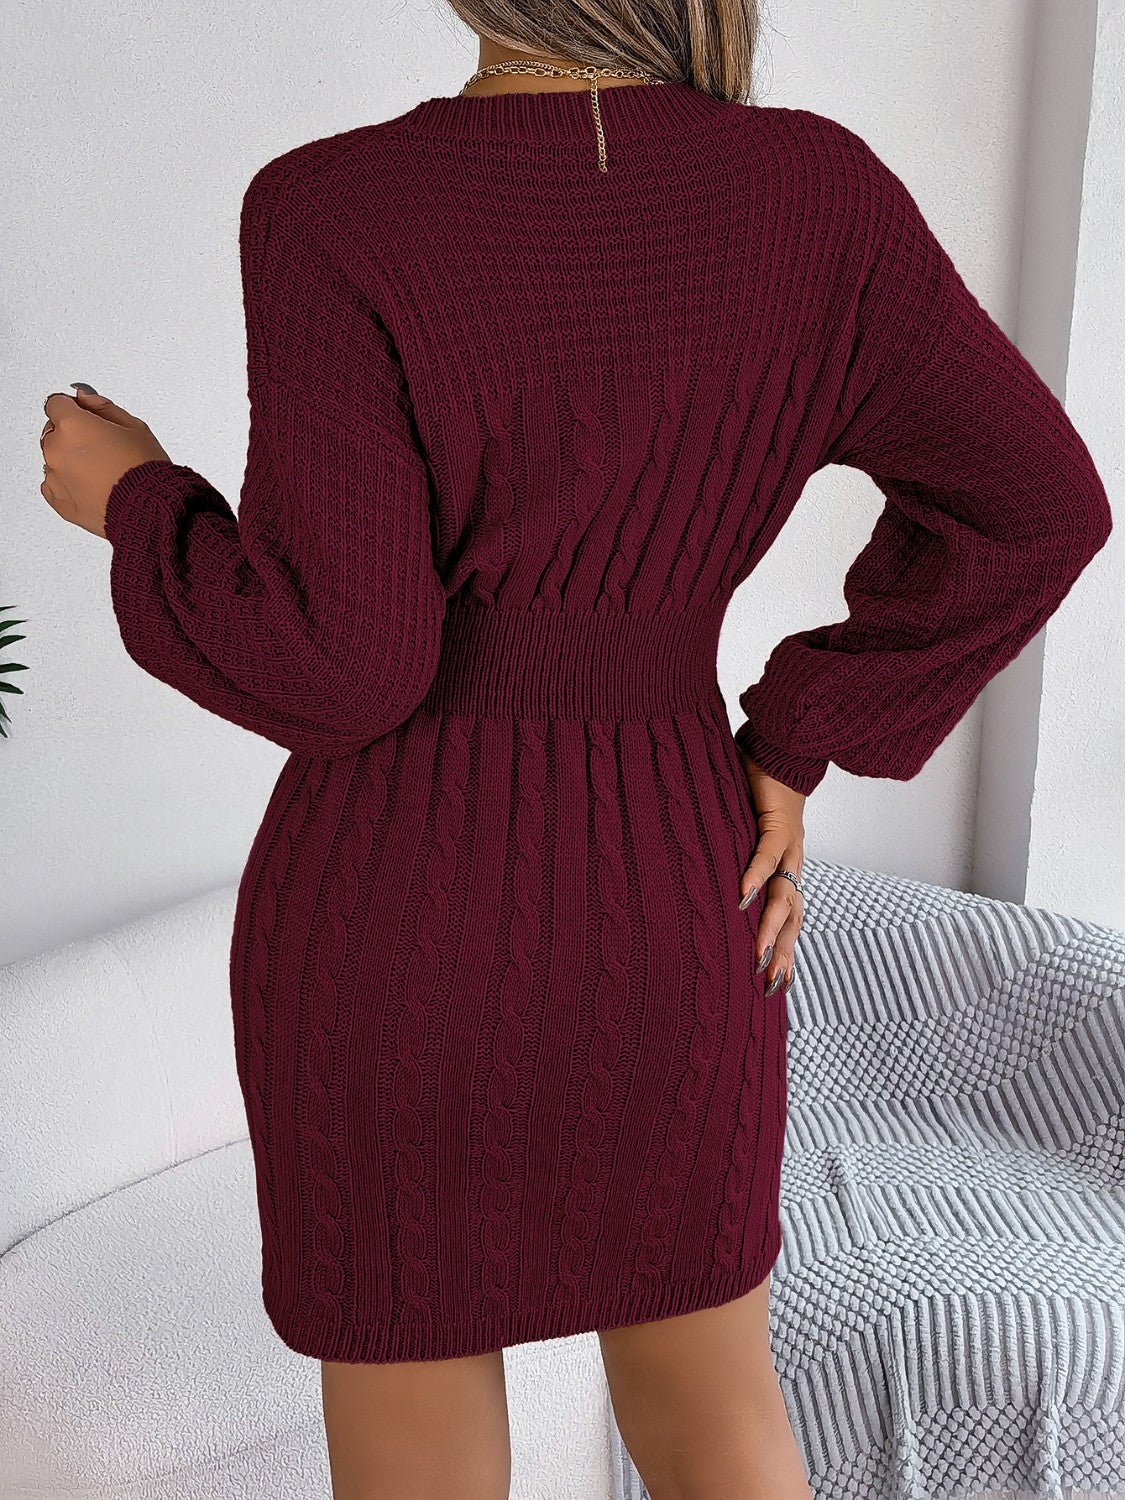 Cable - Knit Cutout Round Neck Slit Sweater Dress - Admiresty